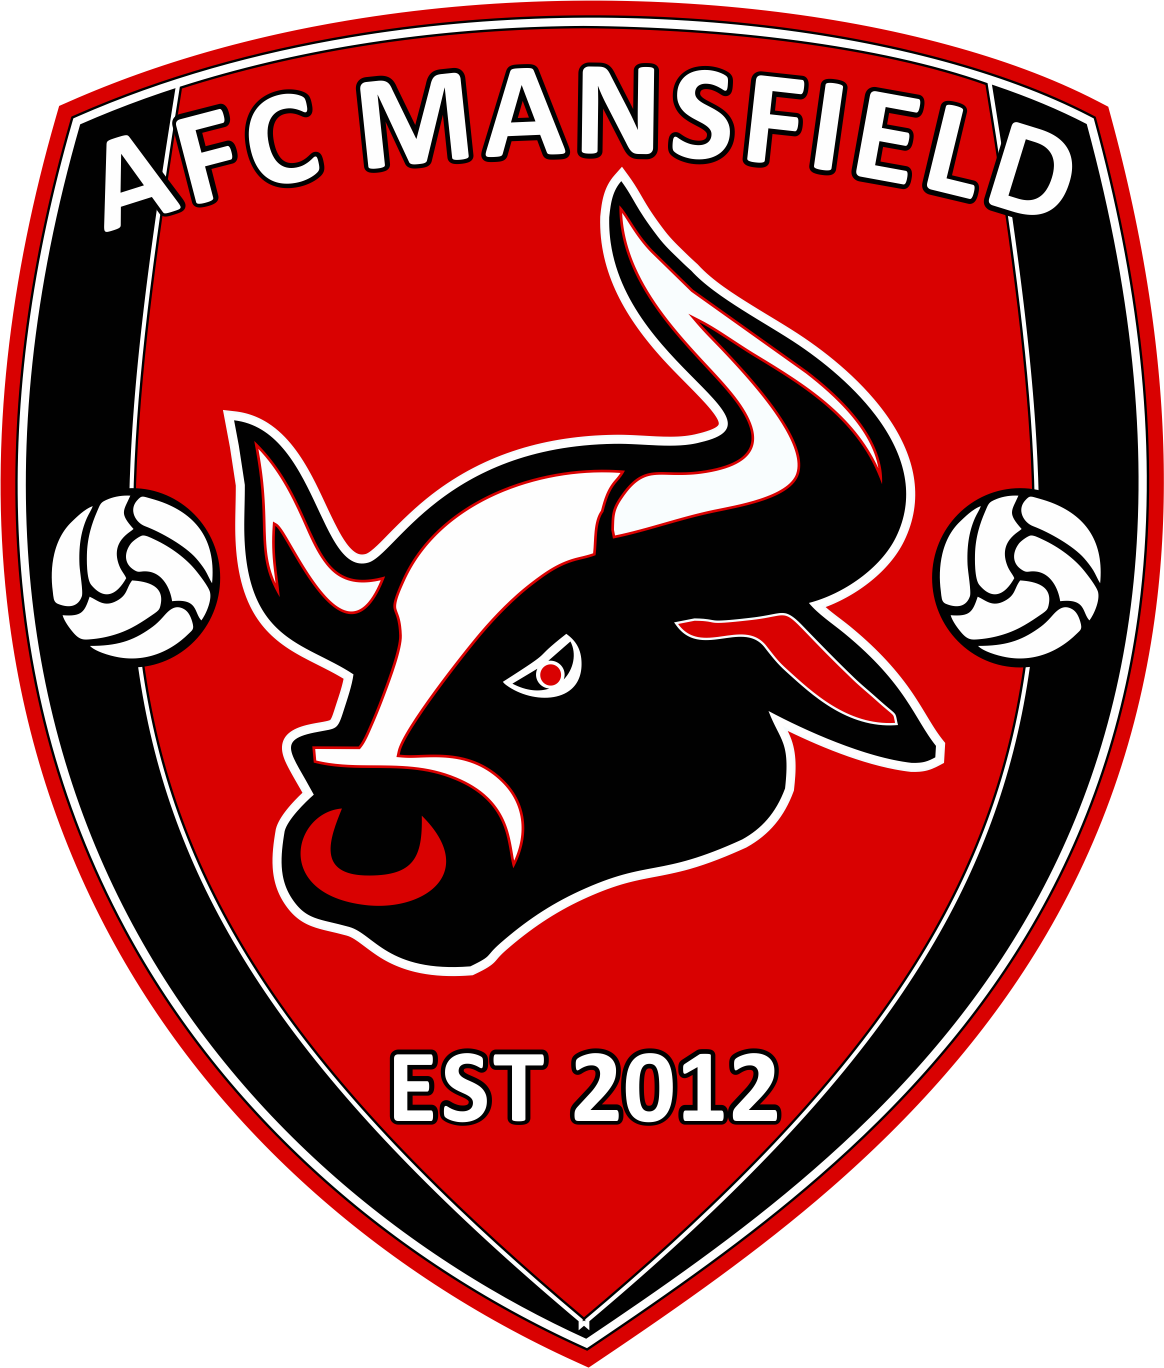 http://4.bp.blogspot.com/-H-JsFKb_f8g/T8iwQUkw9SI/AAAAAAAAABQ/9d0tiwWhSAw/s1600/AFC+Mansfield+badge+new+colours.png